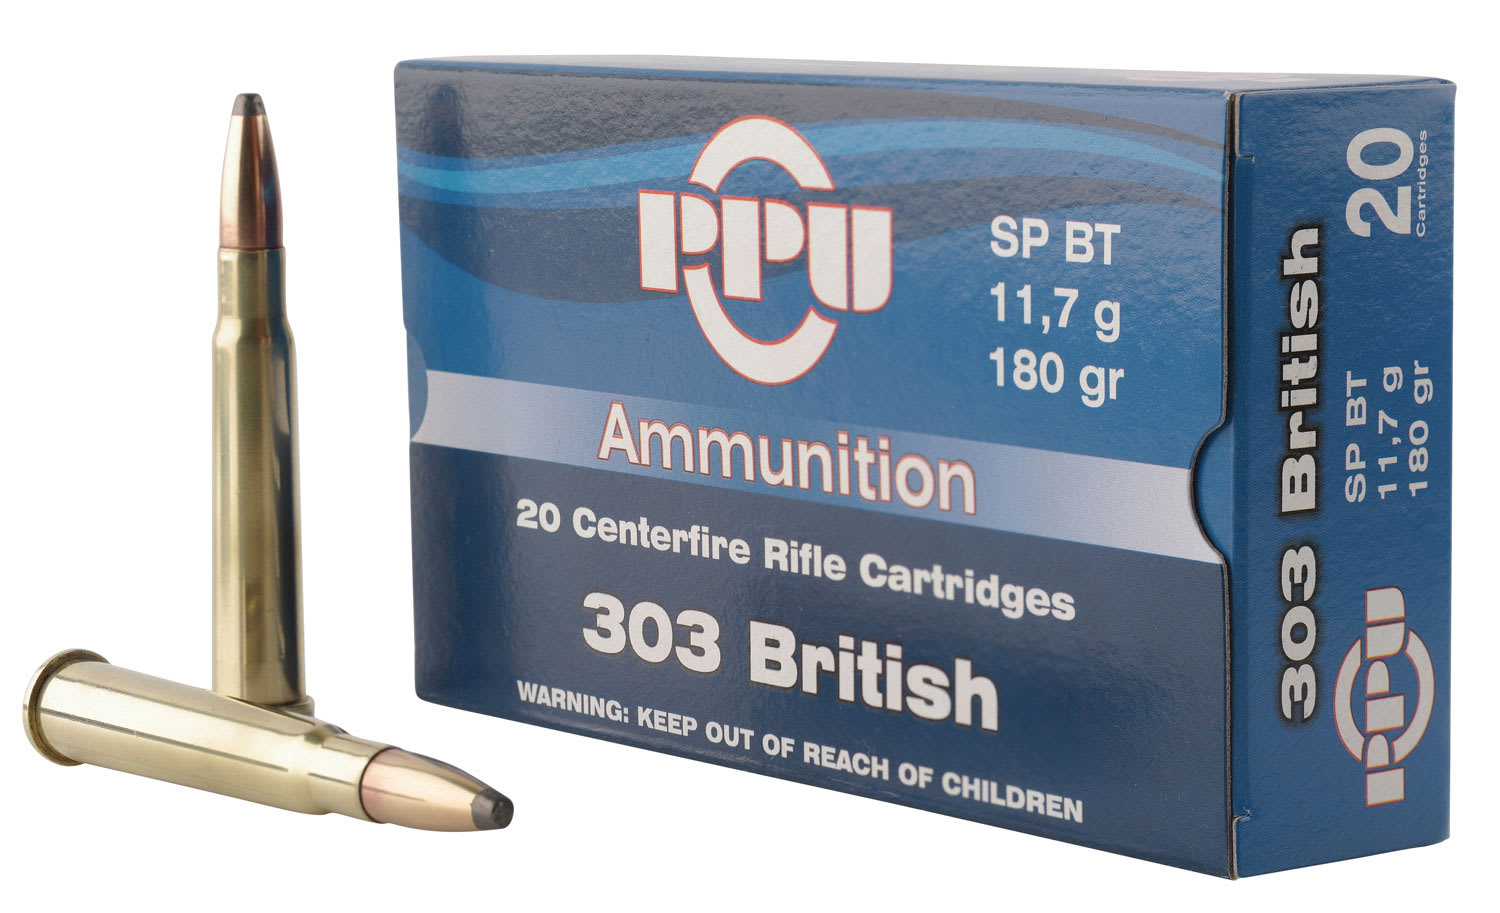 Ammunition: the .303 British caliber